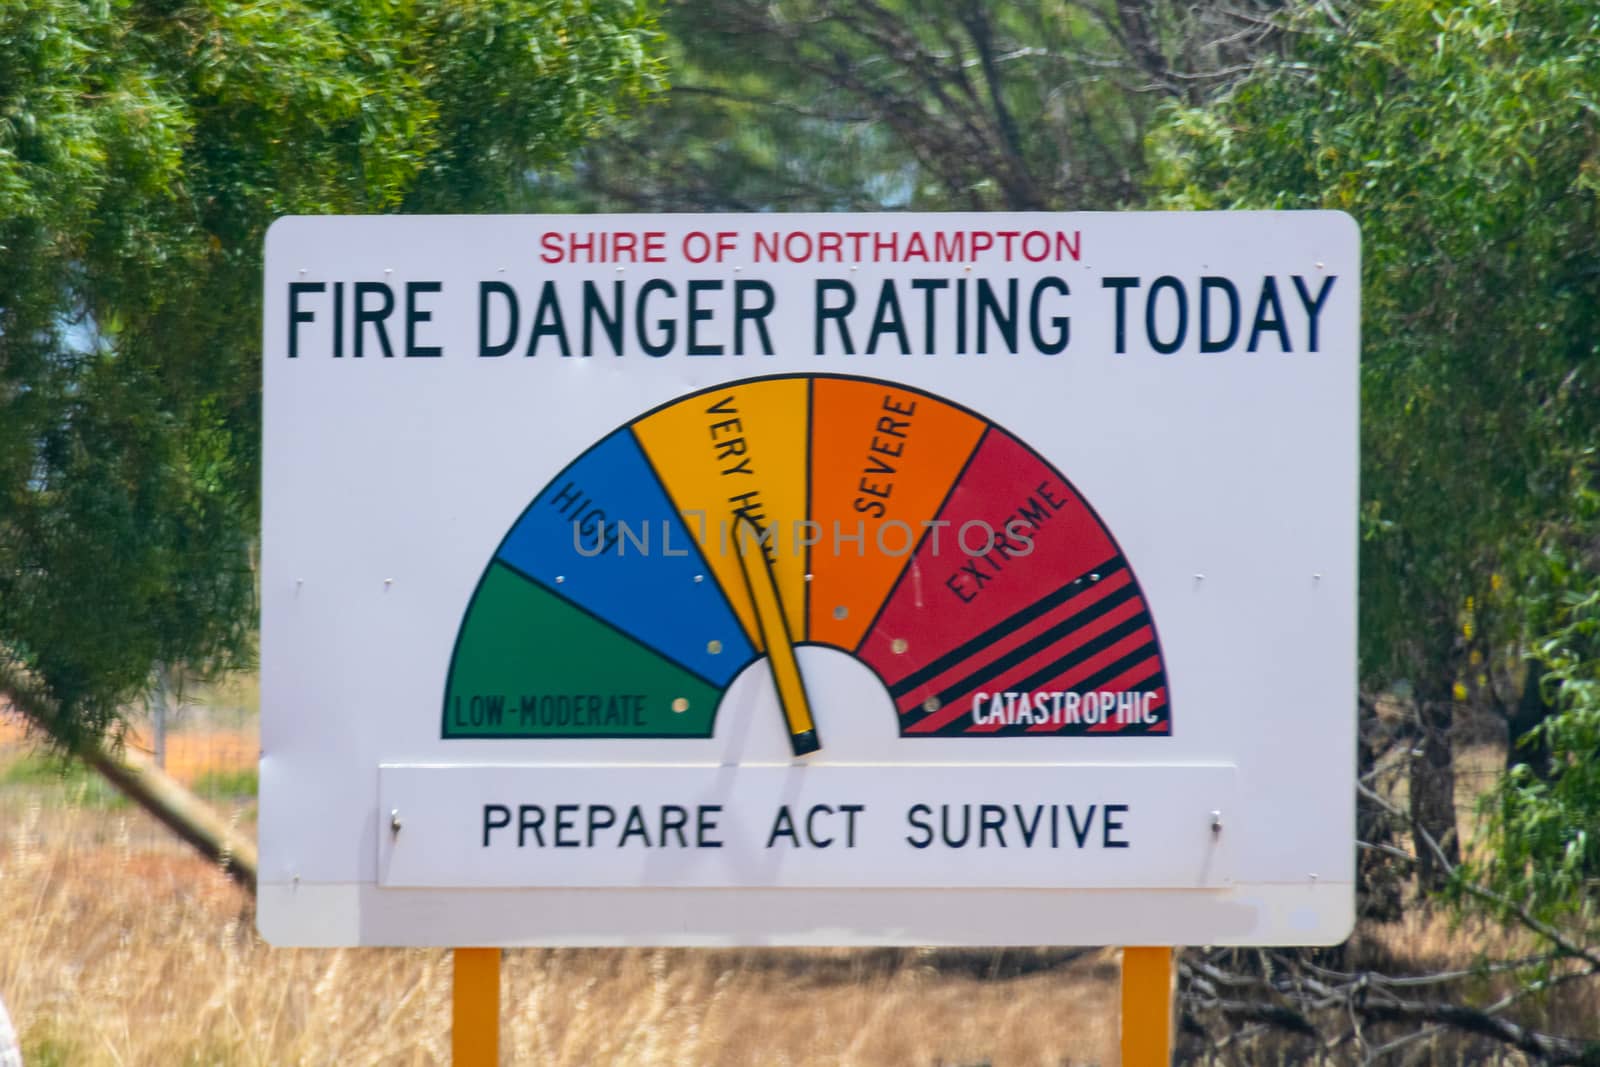 Fire Danger Rating Today street sign in Australia